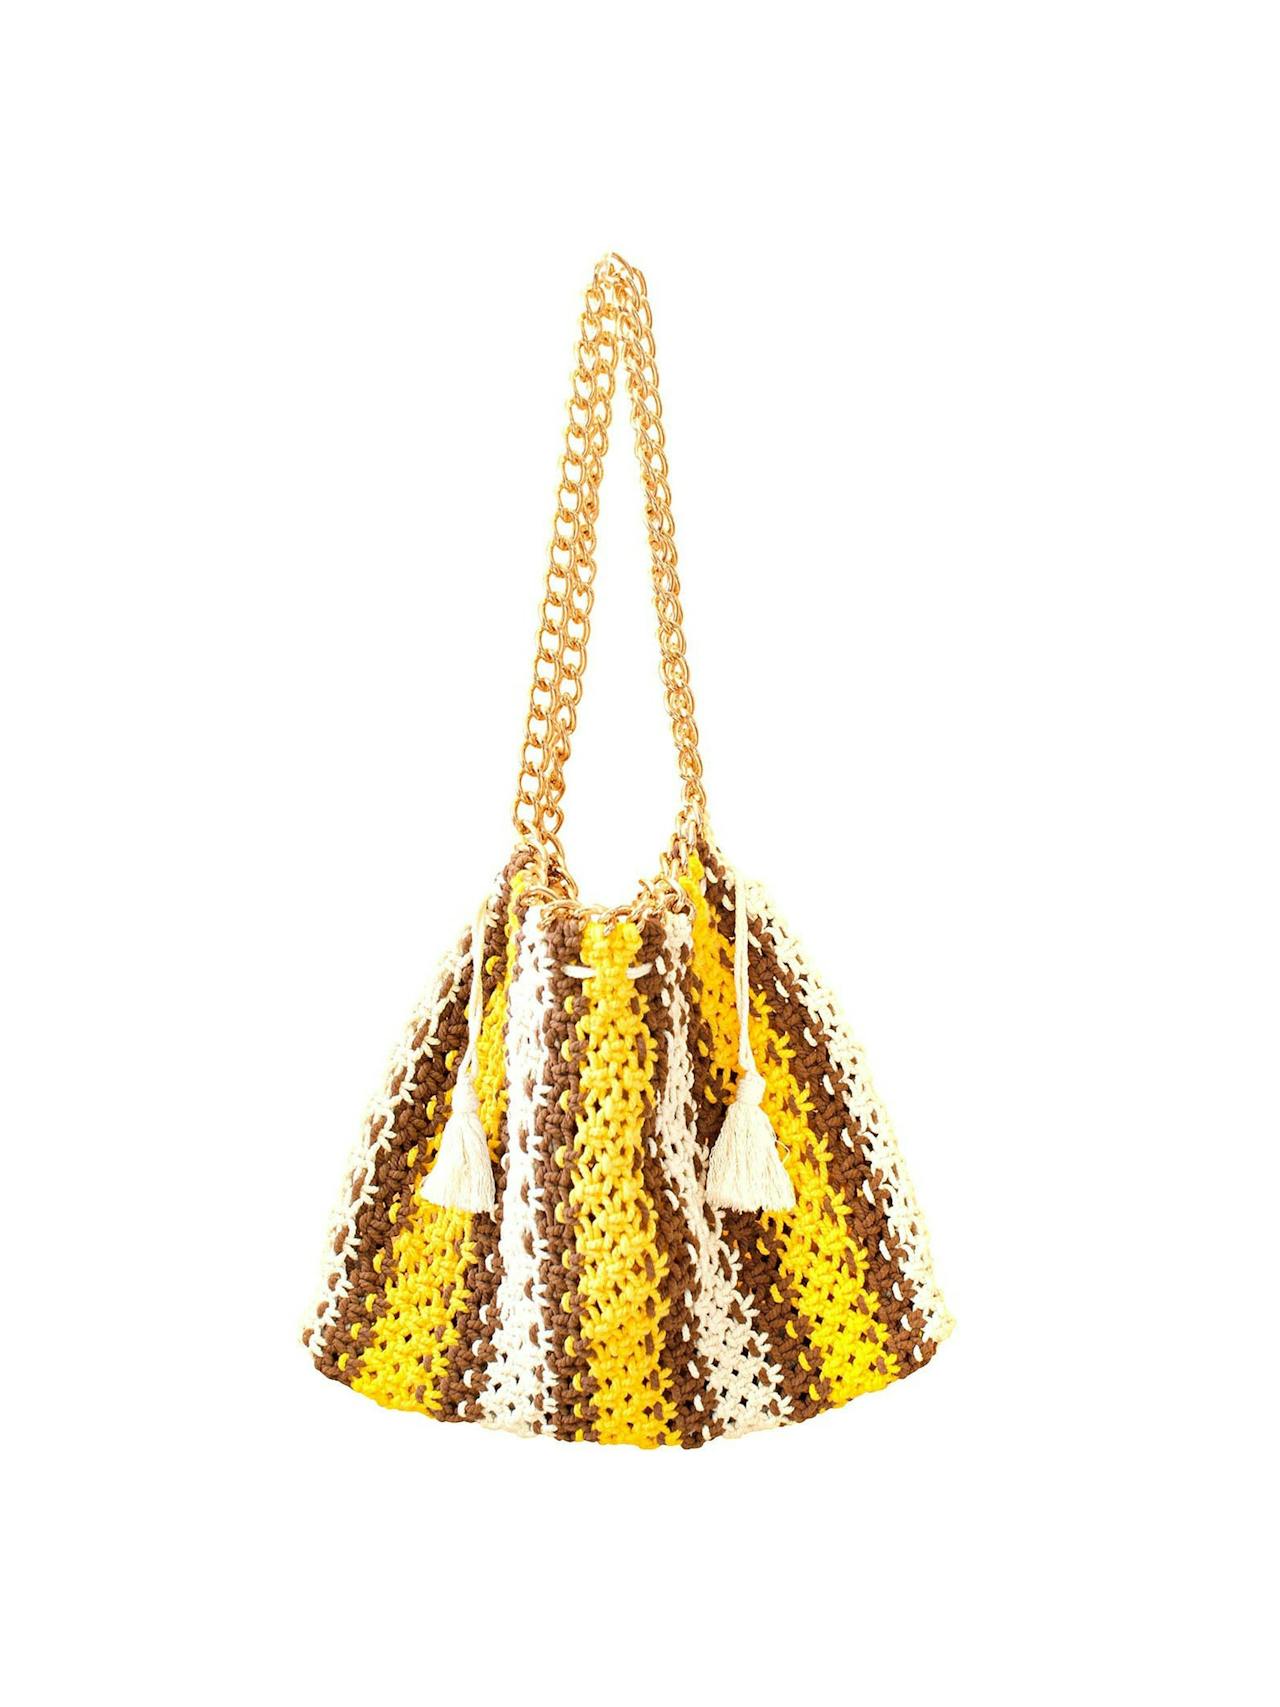 Colette macrame beach bag in yellow x brown